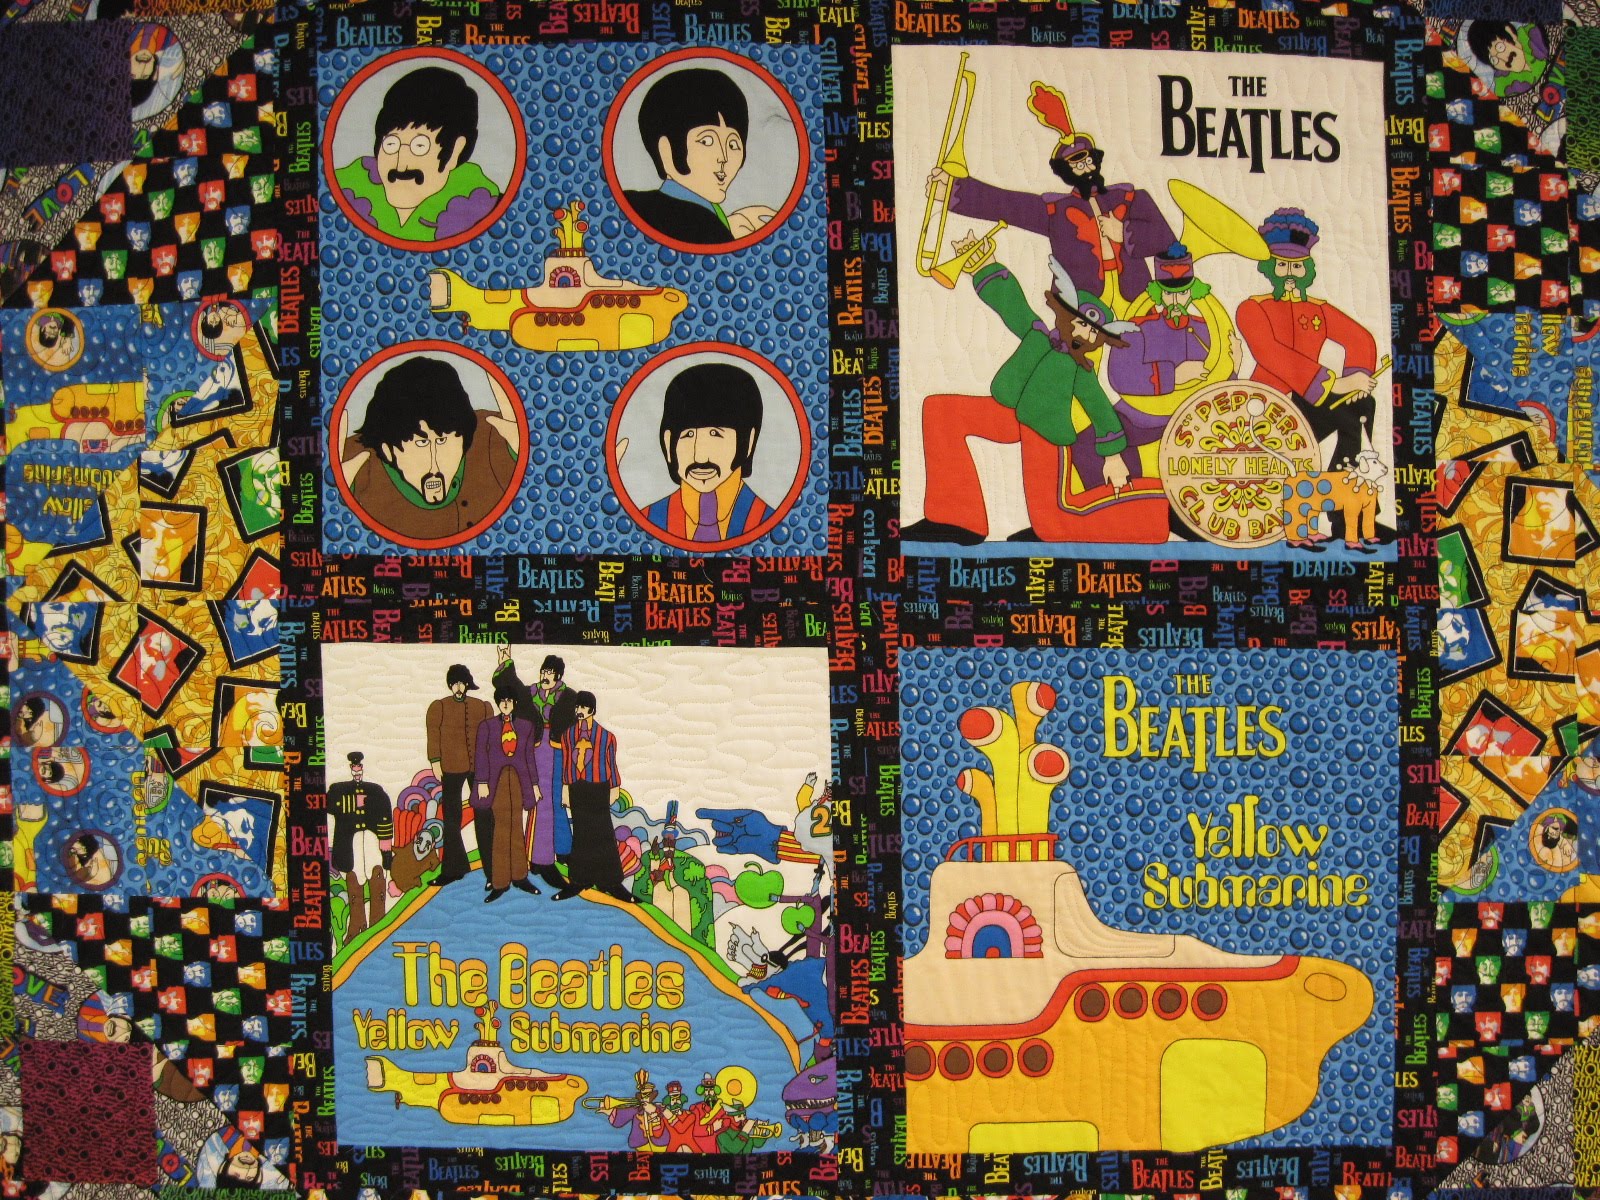 The Beatles Border HD Wallpaper